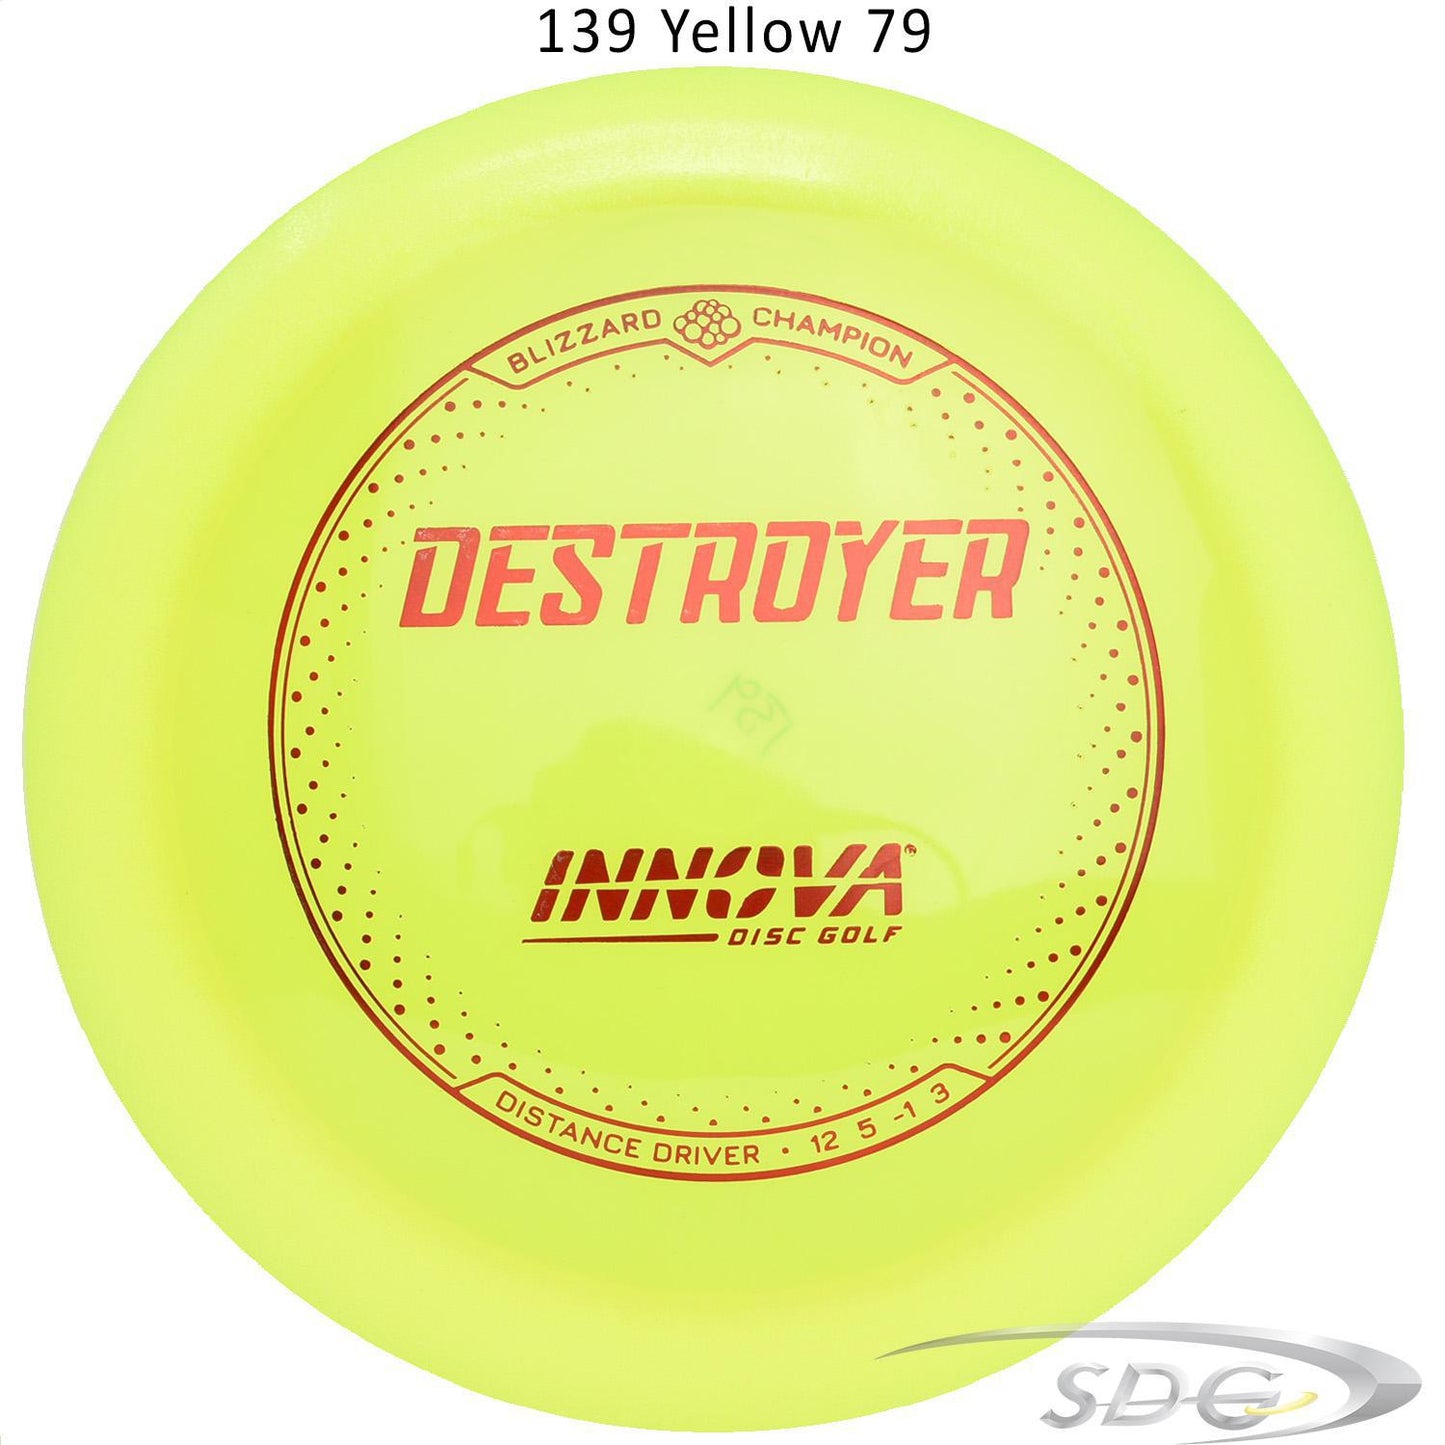 innova-blizzard-champion-destroyer-disc-golf-distance-driver 139 Yellow 79 